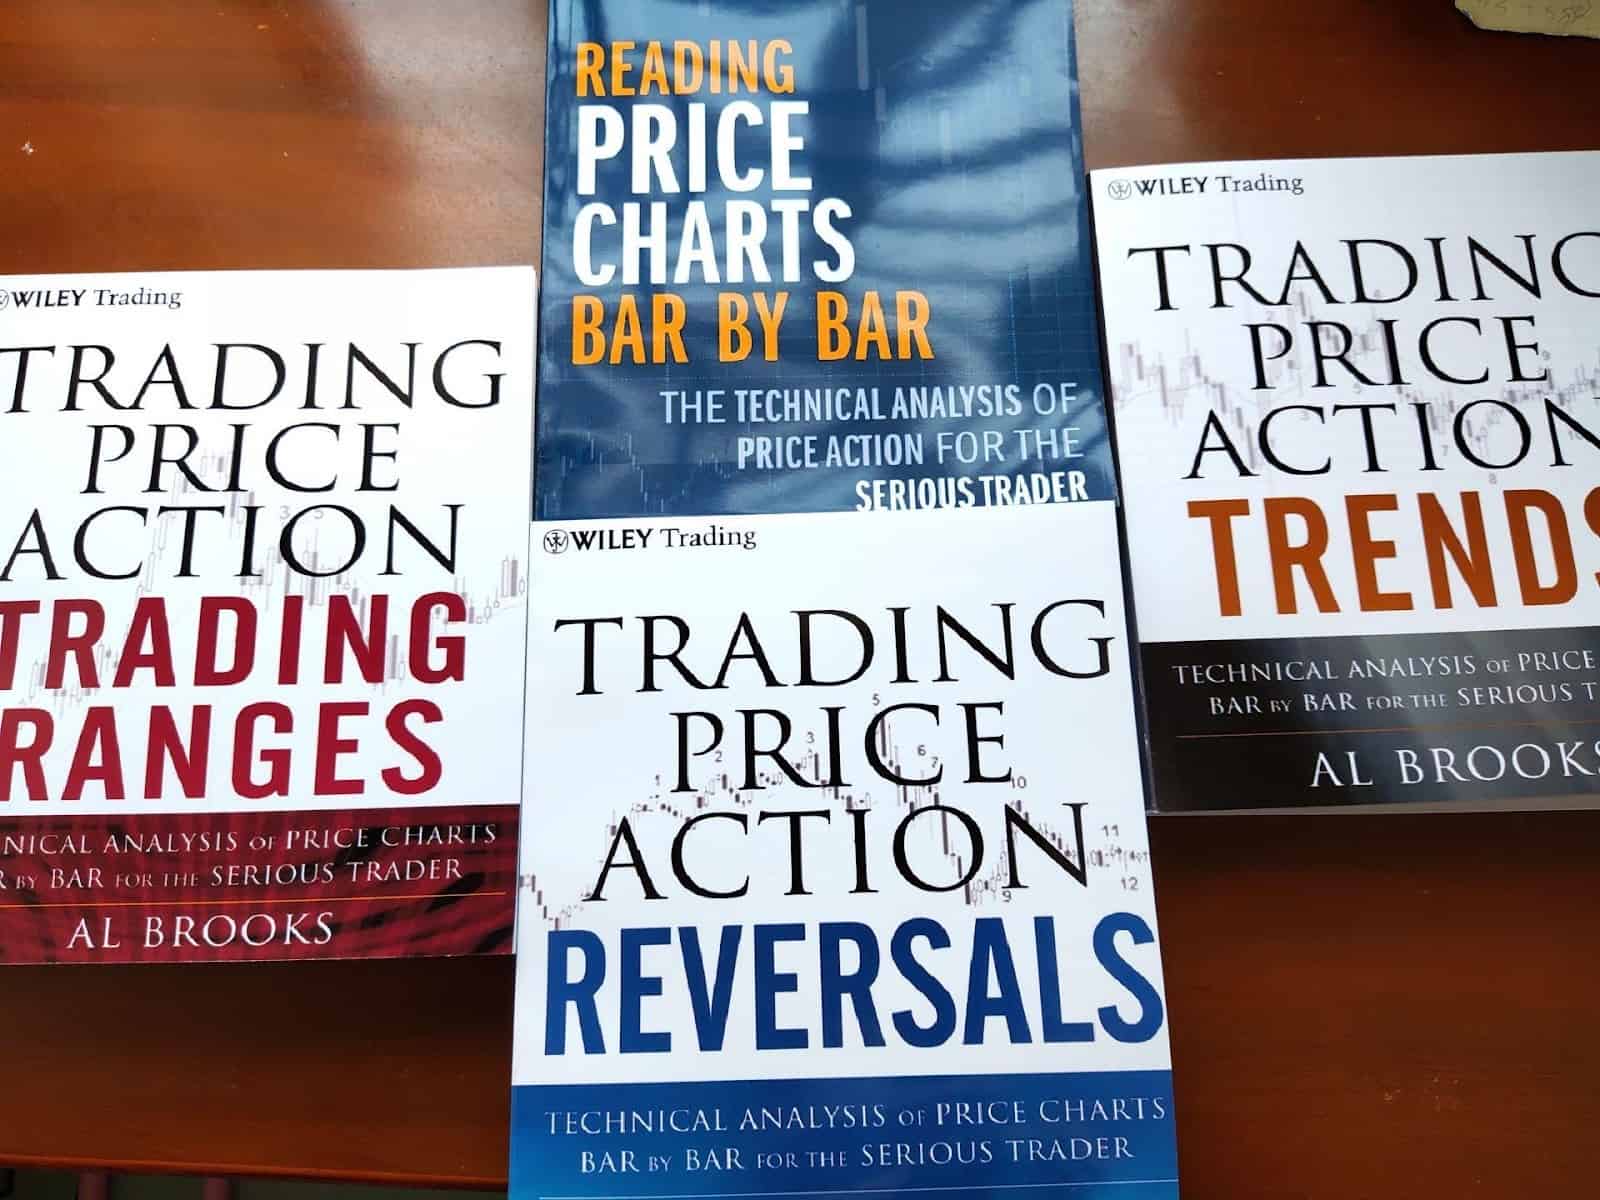 Trading Price Action – AL Brooks